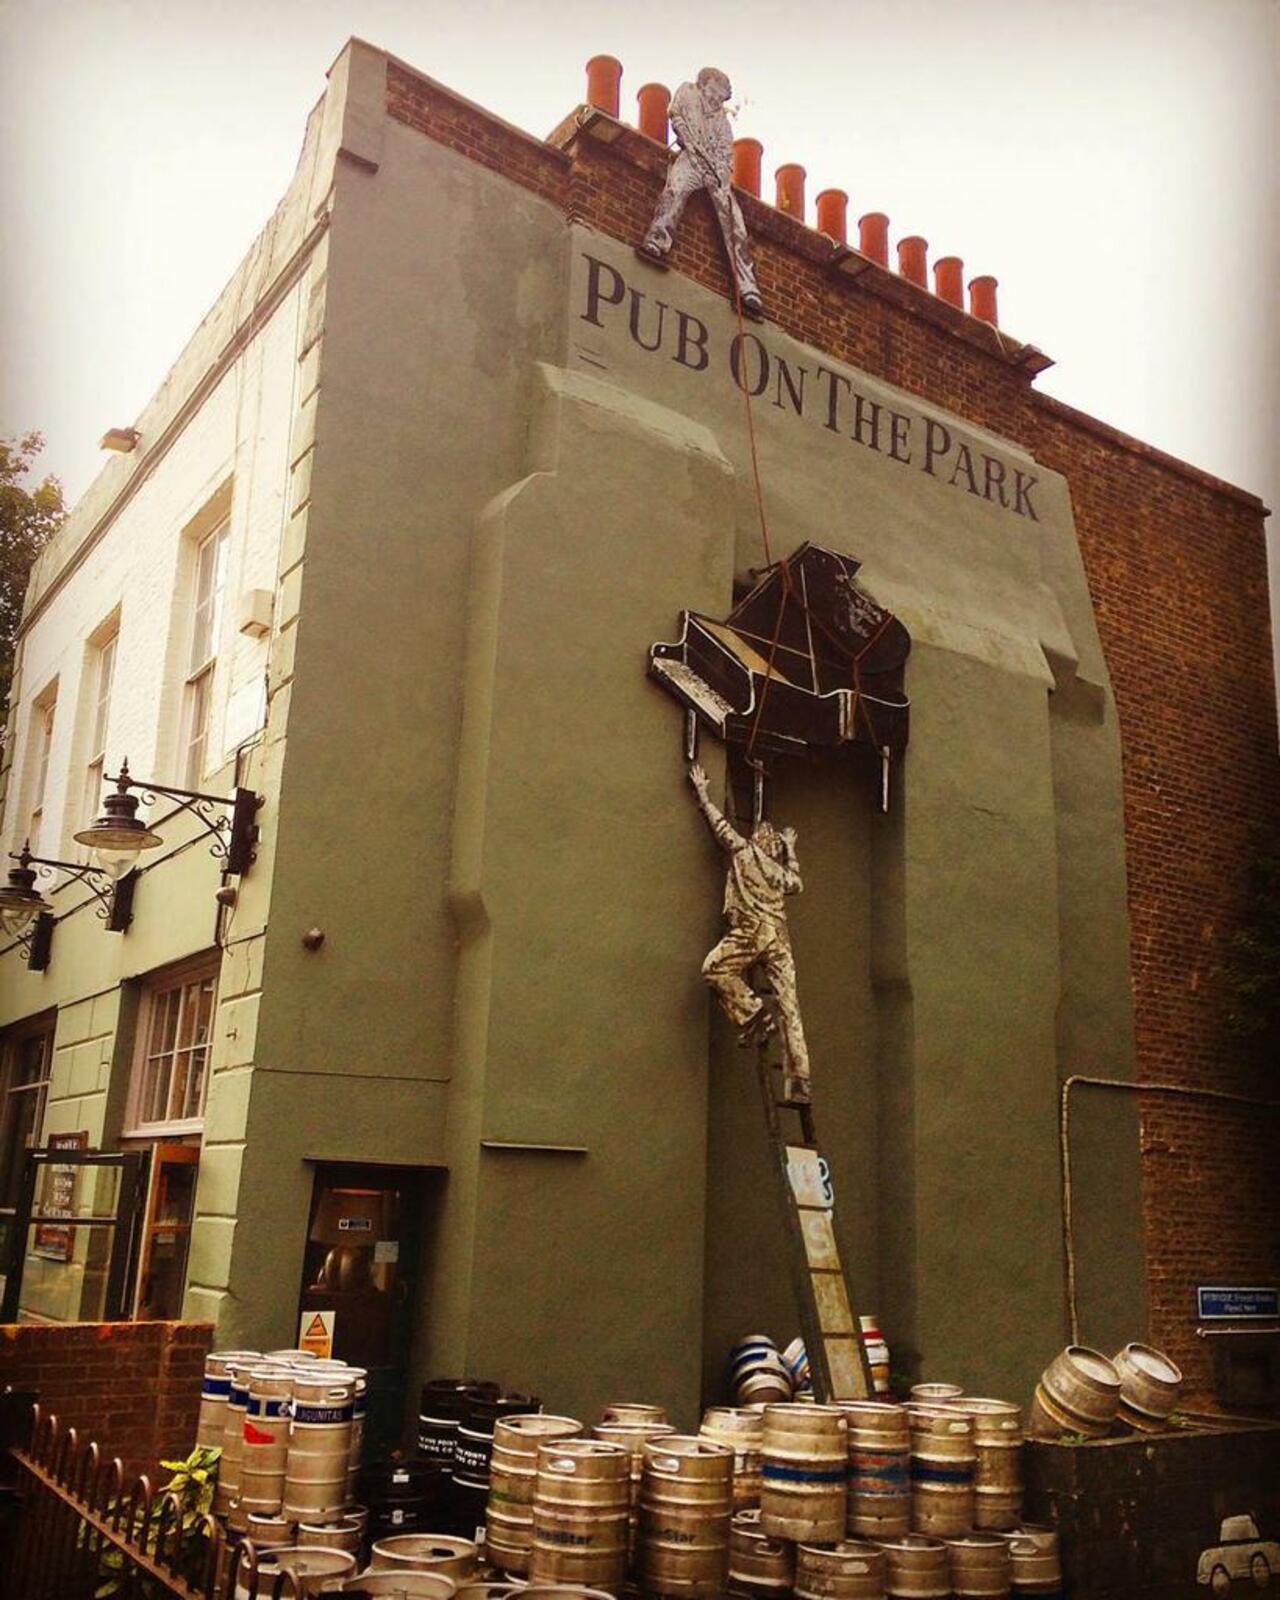 #pub #graffiti #londonstreetart #globalstreetart #streetartlondon #streetart #art #artist #london #hackney #instaco… http://t.co/Jef7DPnHf8